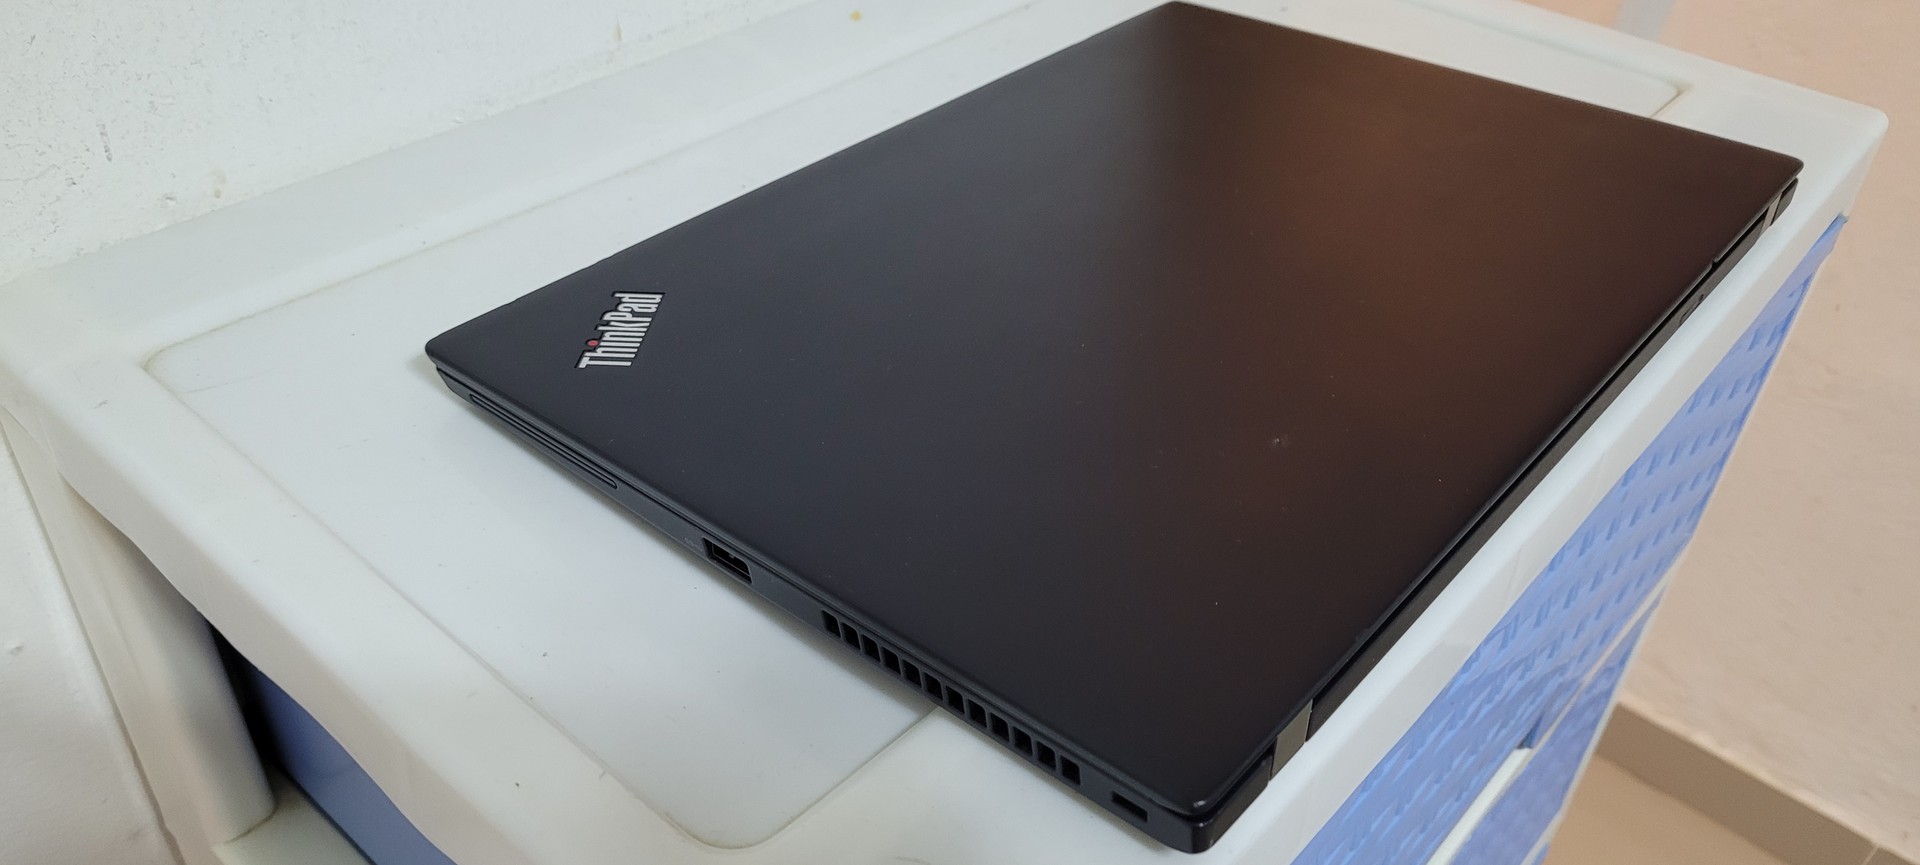 computadoras y laptops - Lenovo t460 14 Pulg Core i5 6ta Gen Ram 8gb ddr4 Disco 256gb SSD Wifi bluetoth 2